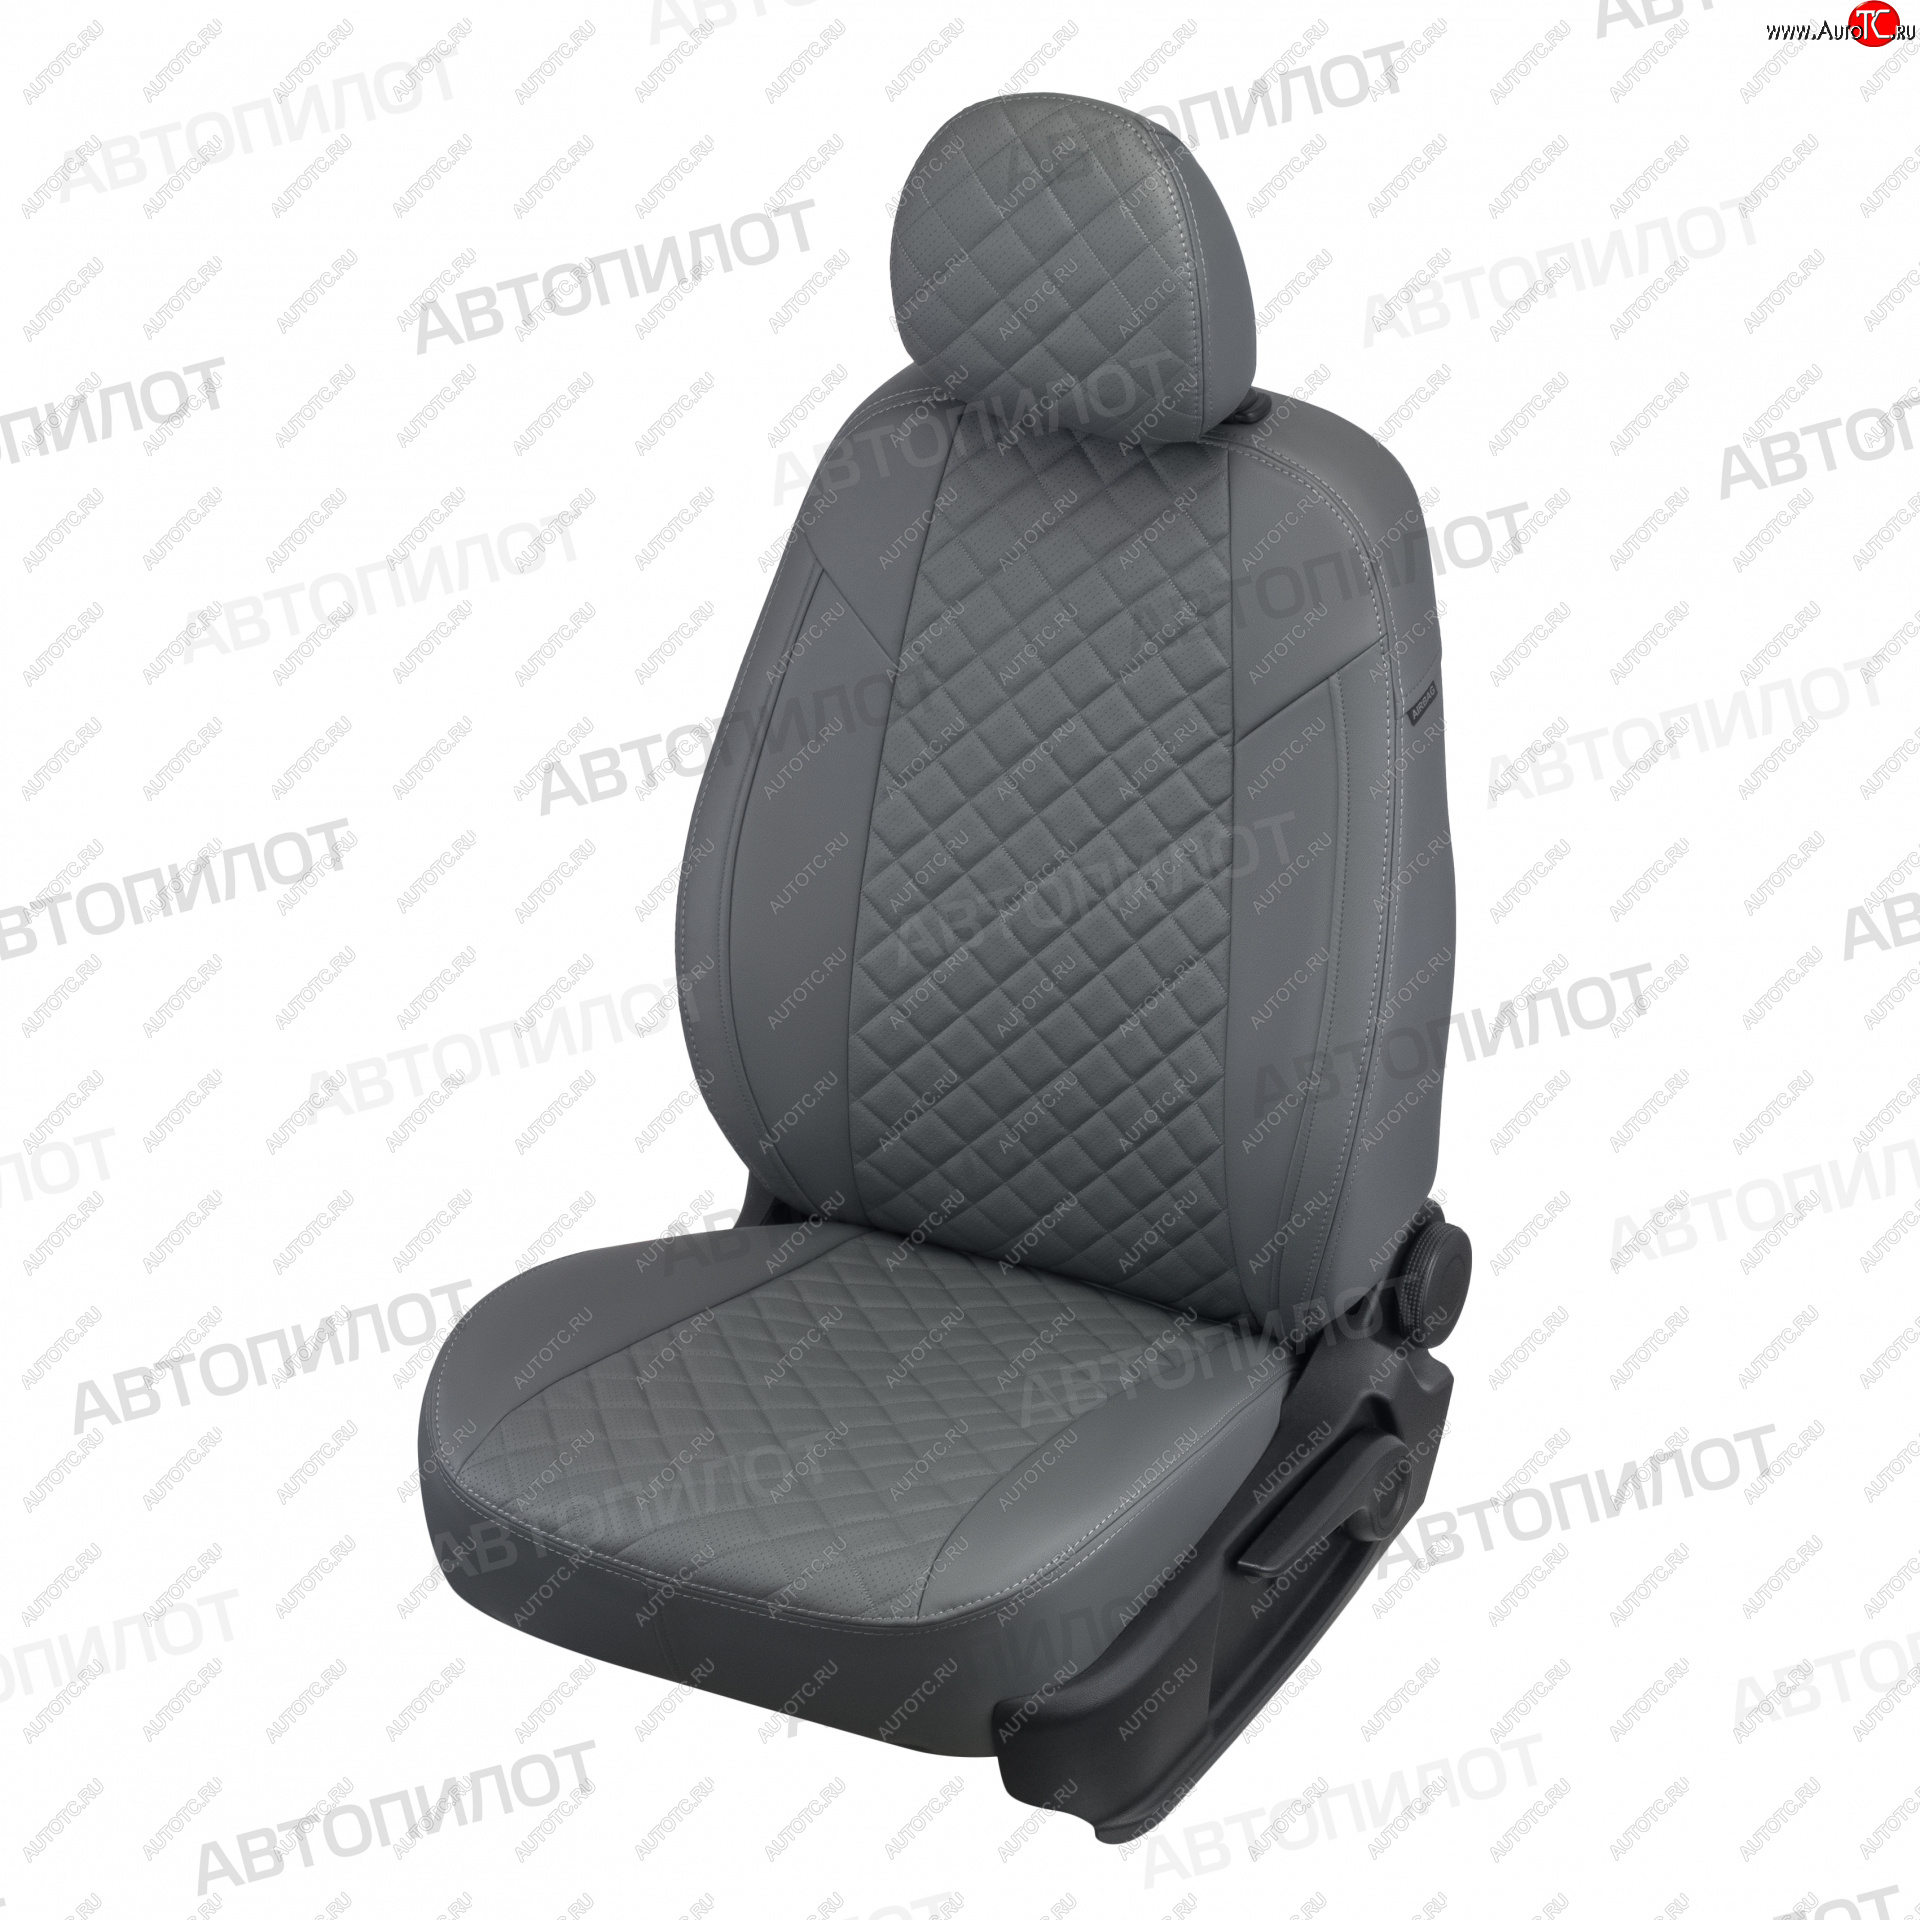 14 499 р. Чехлы сидений (5 мест, экокожа) Автопилот Ромб  Ford Galaxy  2 (2006-2015) (серый)